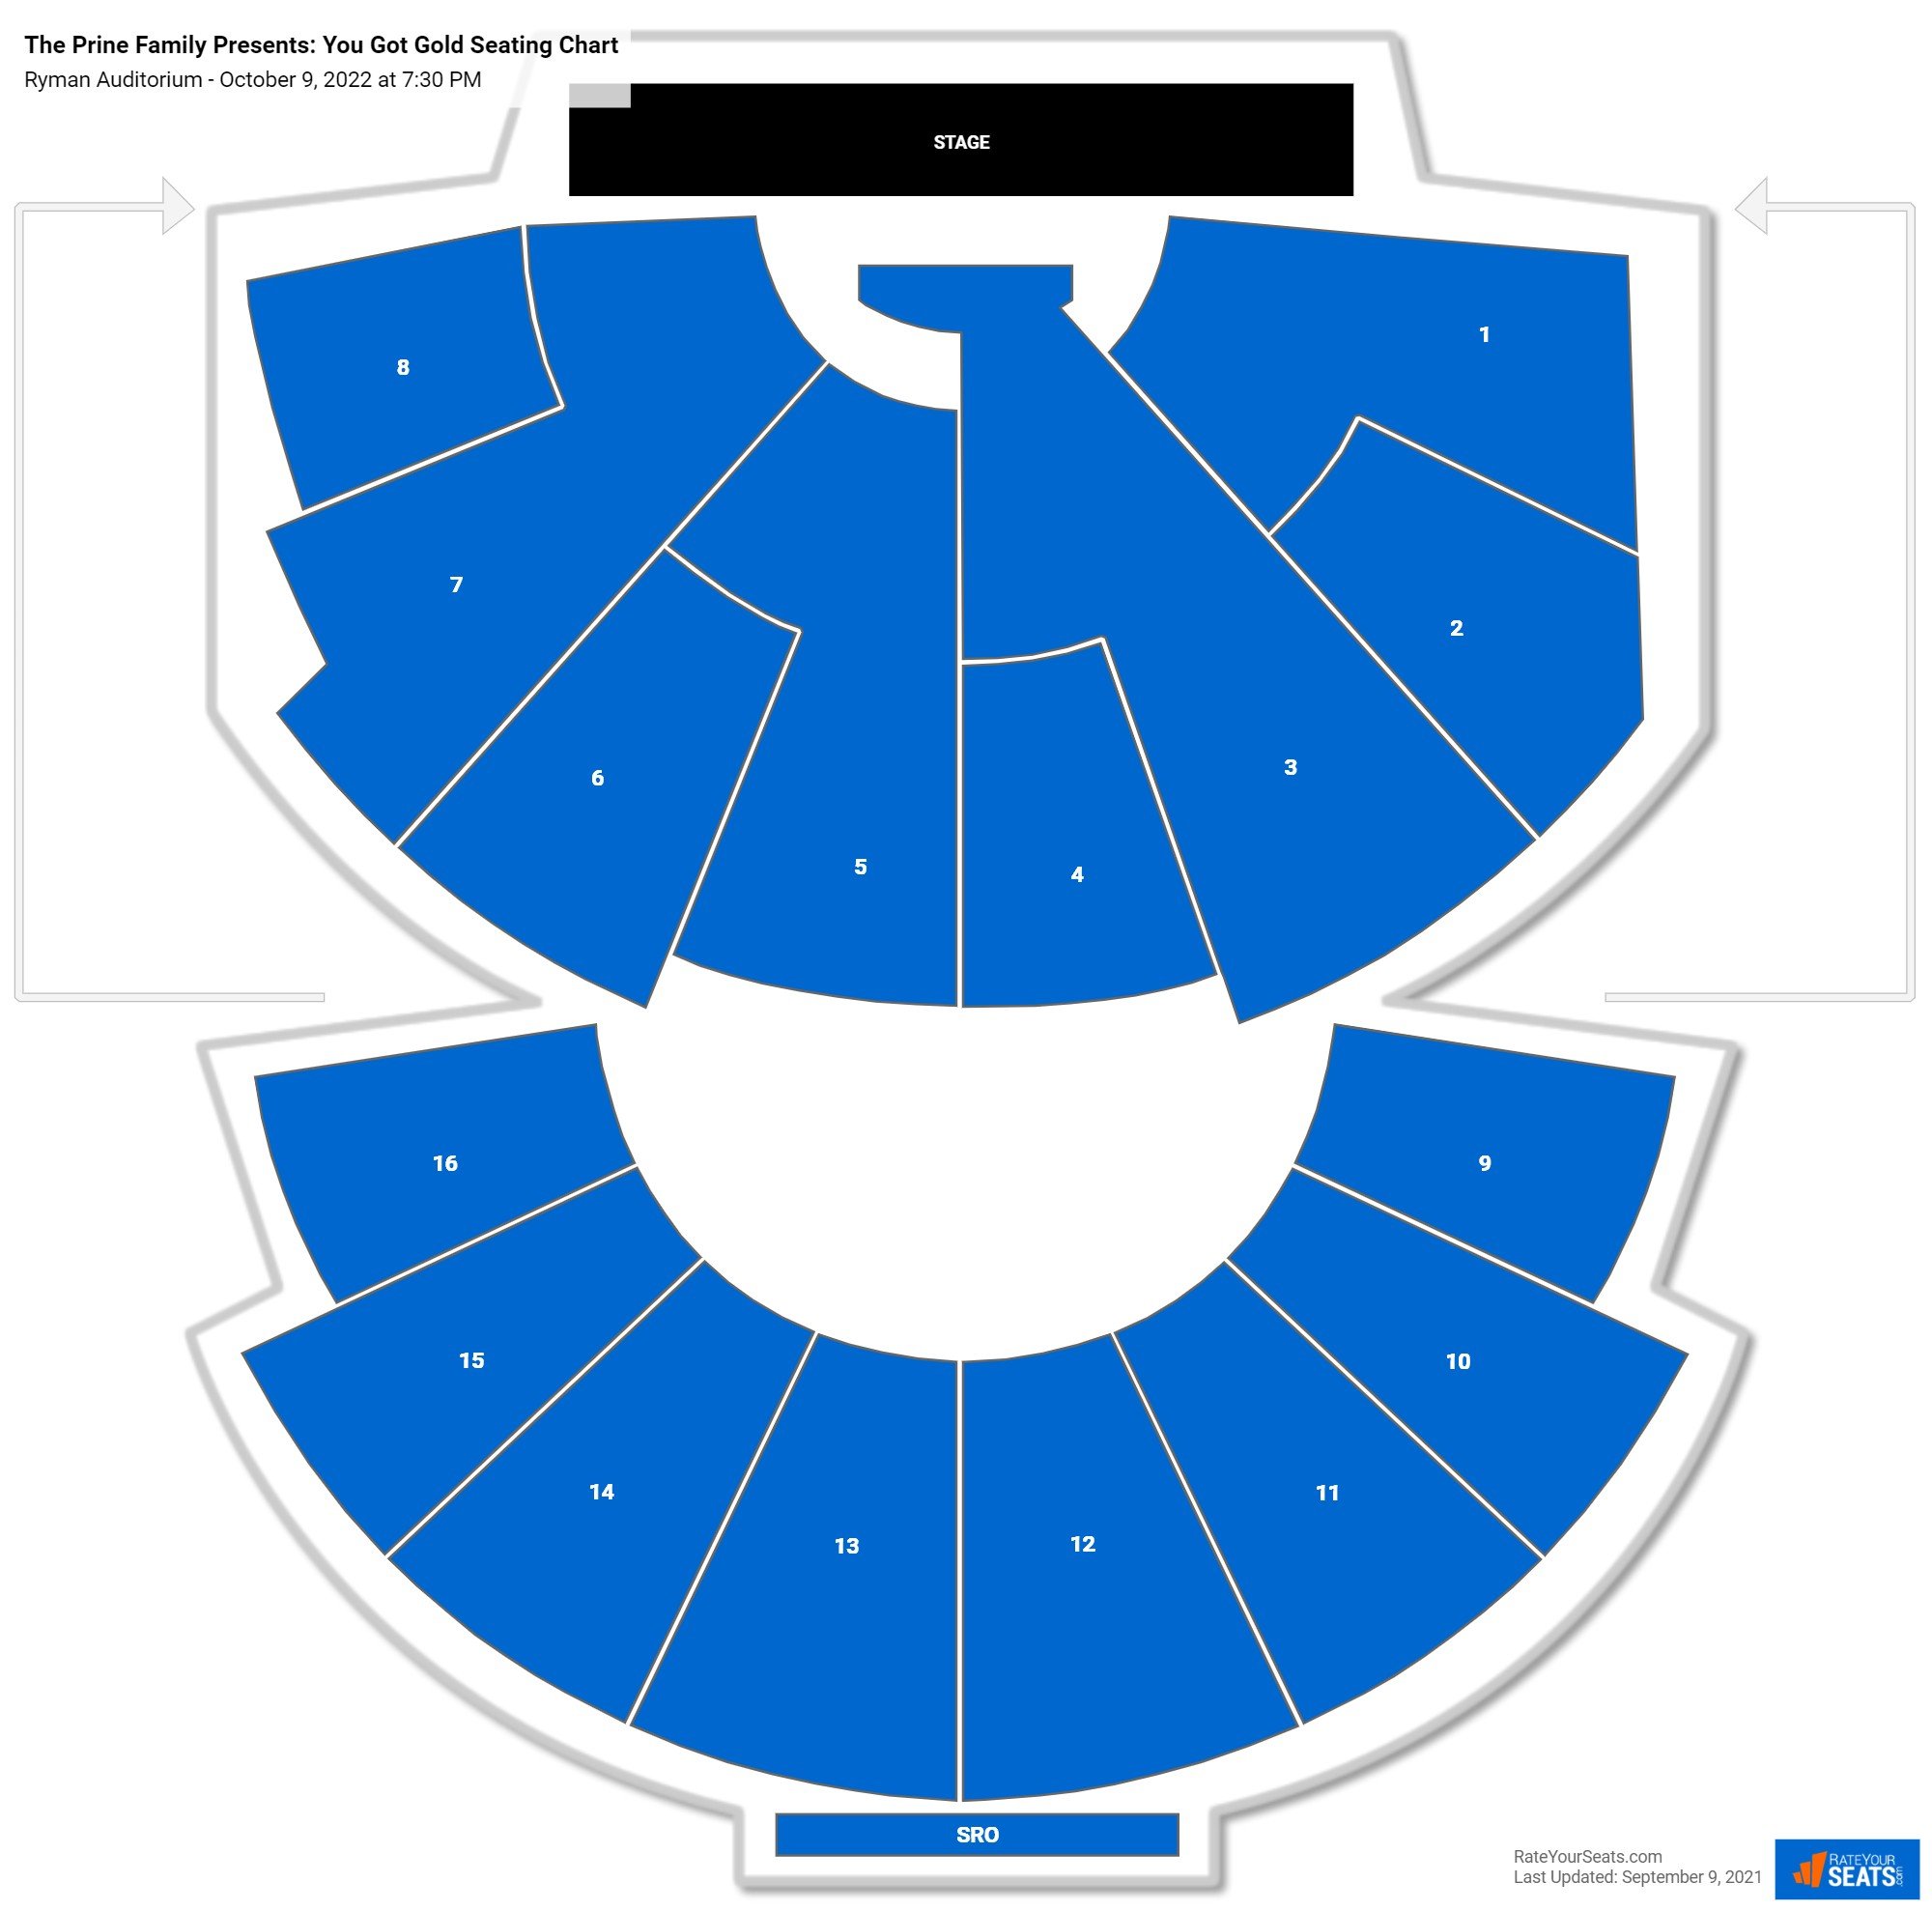 Ryman Auditorium Seating Chart - RateYourSeats.com